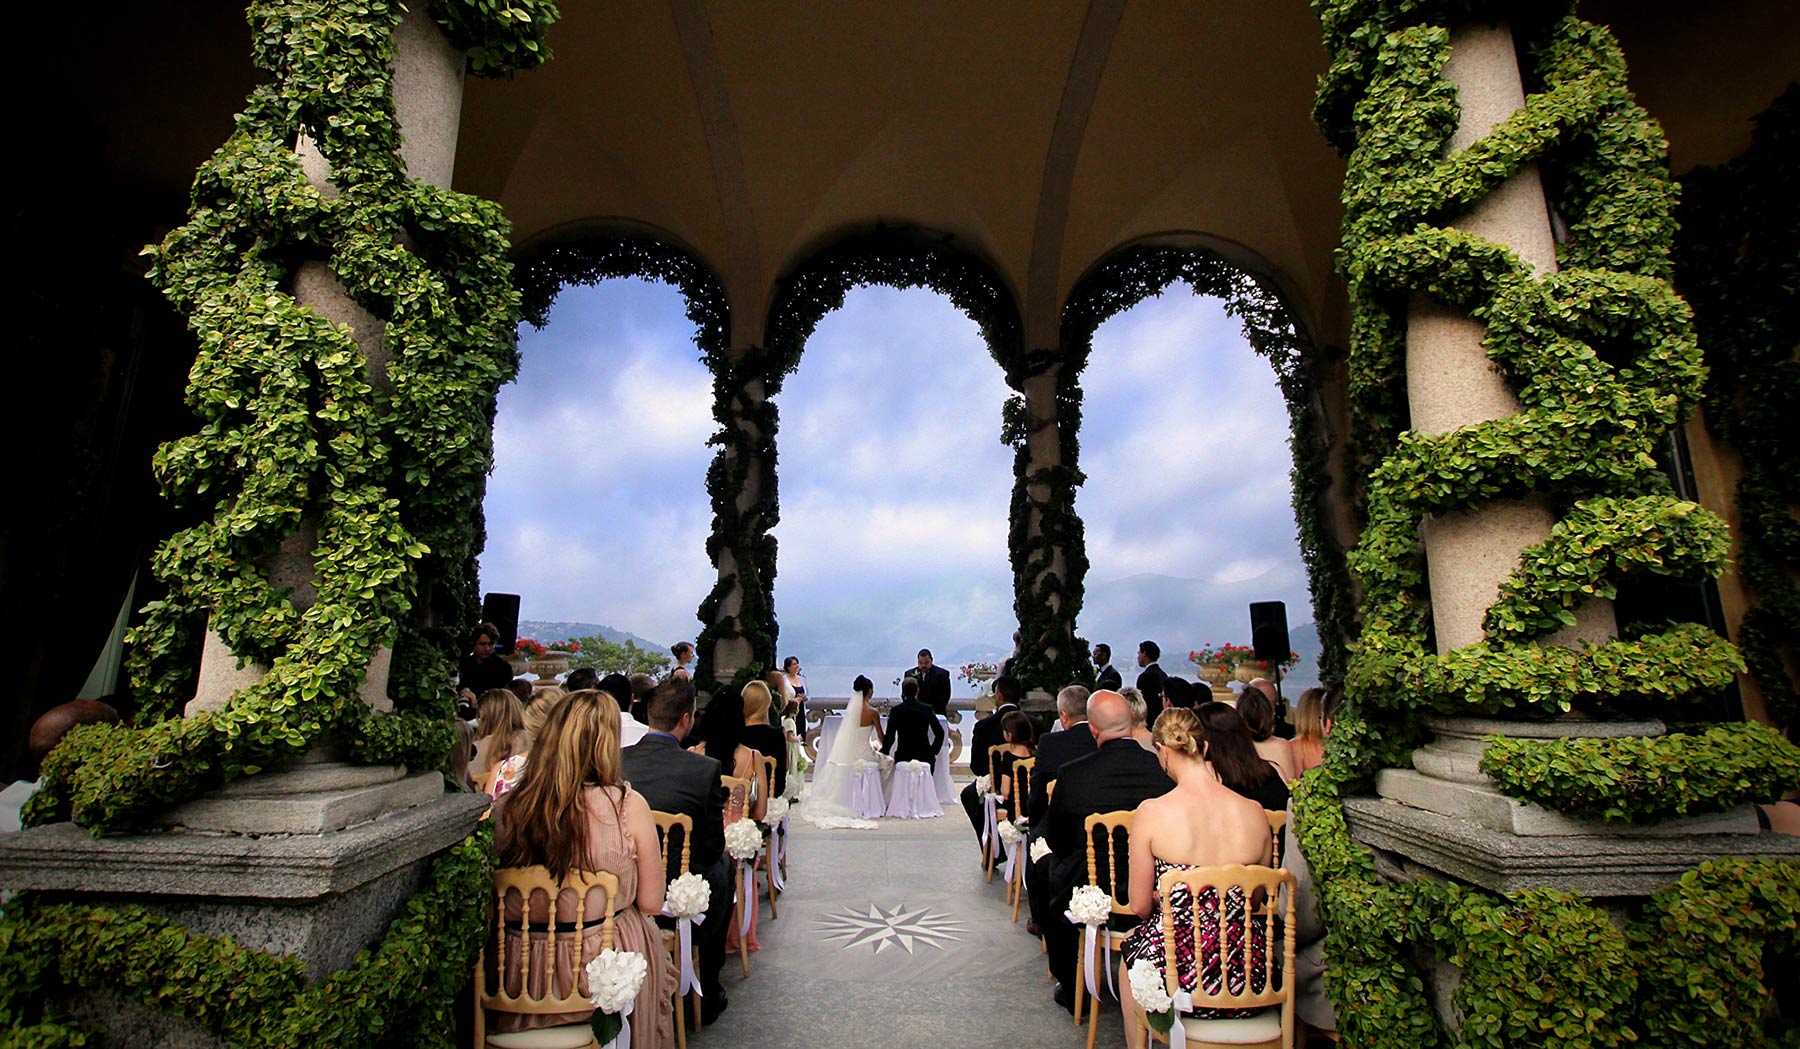 Civil wedding ceremonies with legal value in Italy